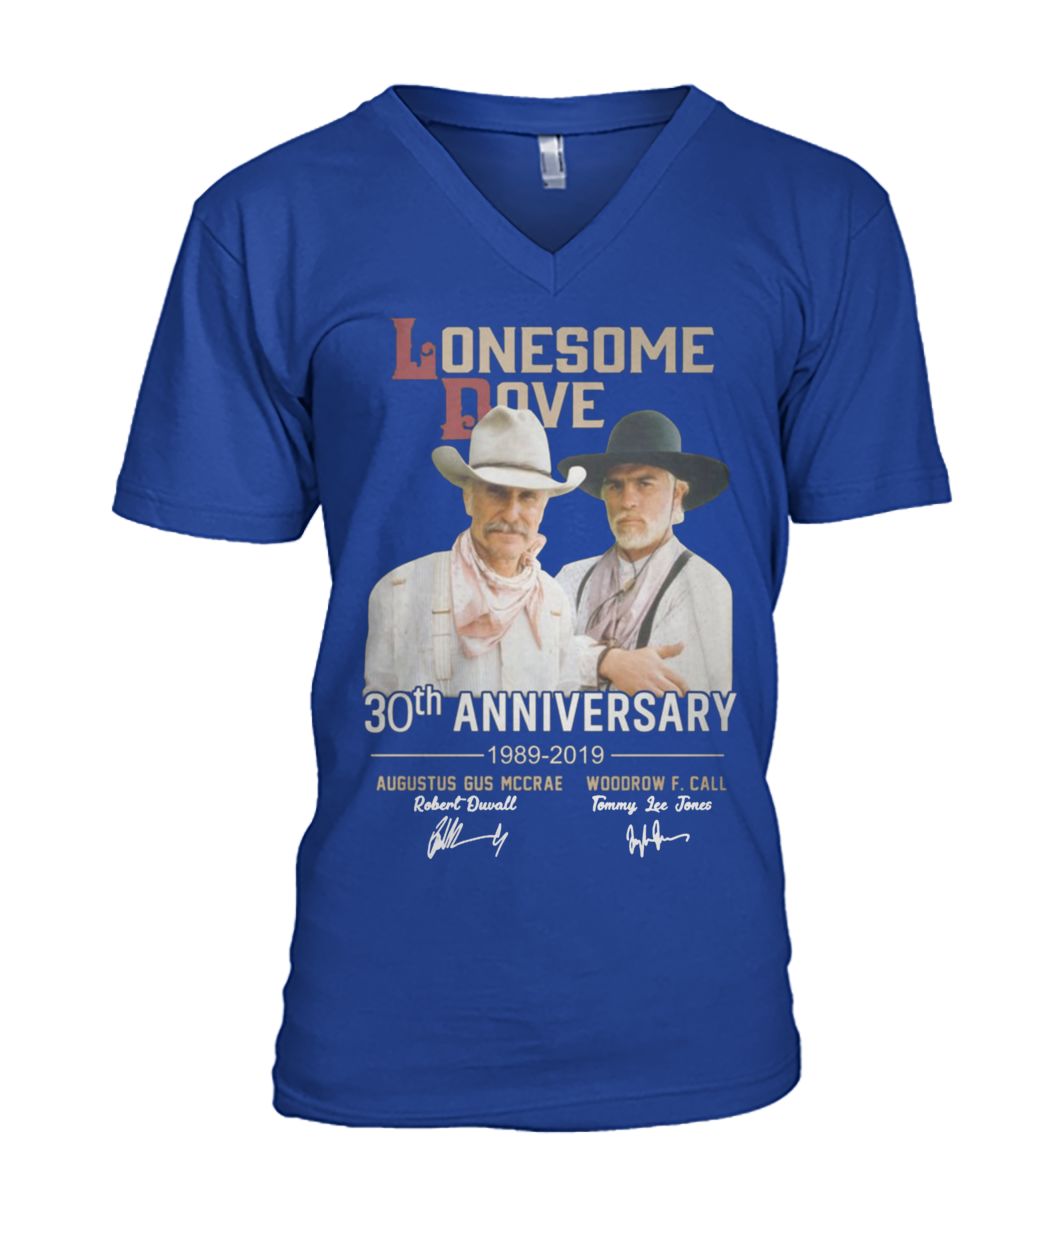 Lonesome dove 30th anniversary 1989-2019 signatures mens v-neck